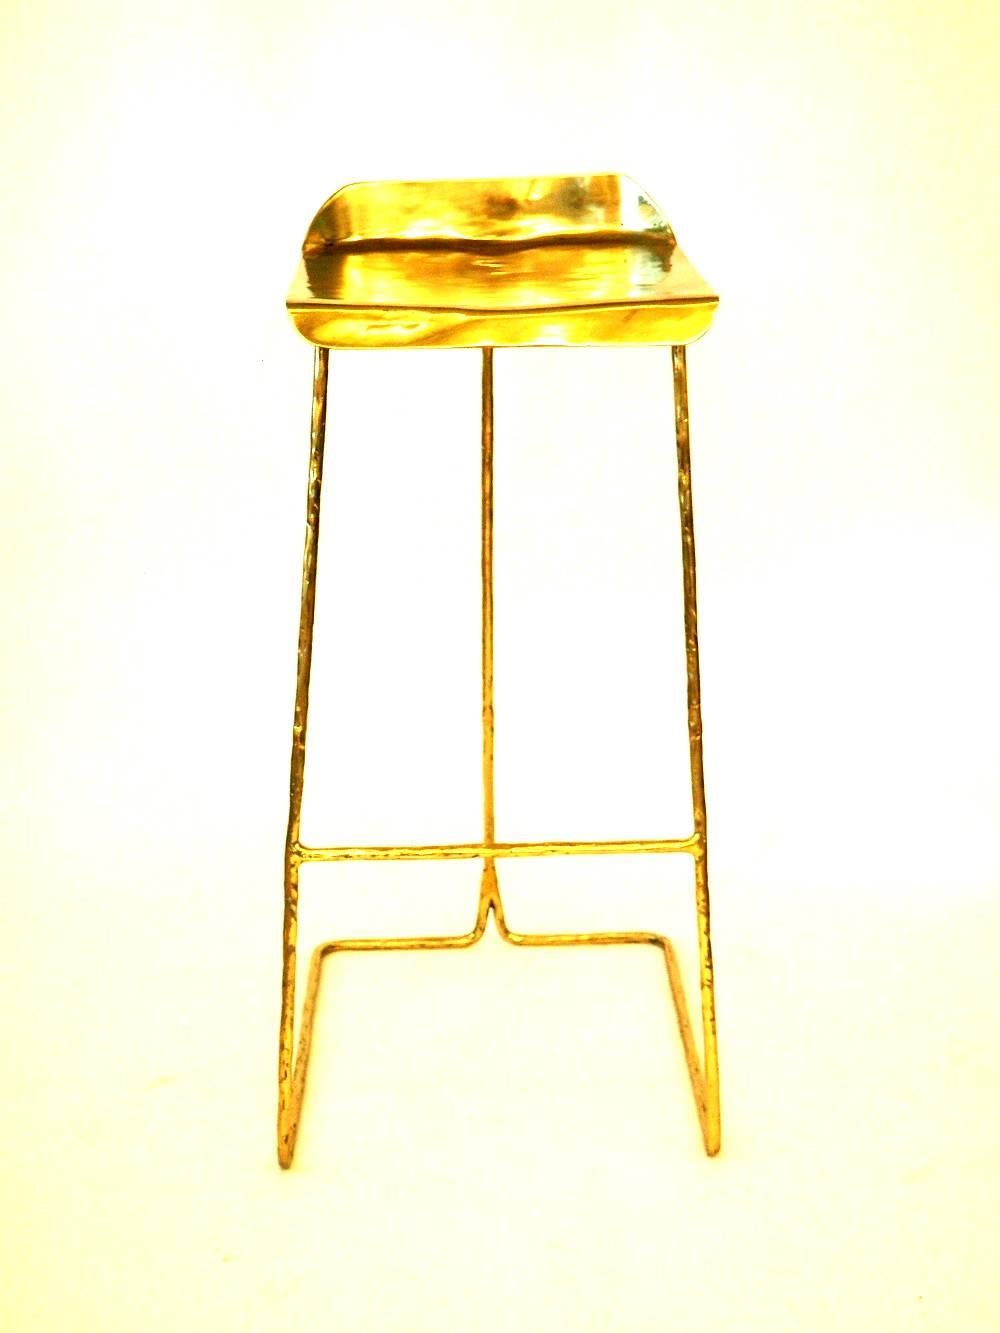 Brass stool, Misaya
Dimensions: W 41 x L 51 x H 80/86 cm
Hand-sculpted

This brass stool won several design awards.
      